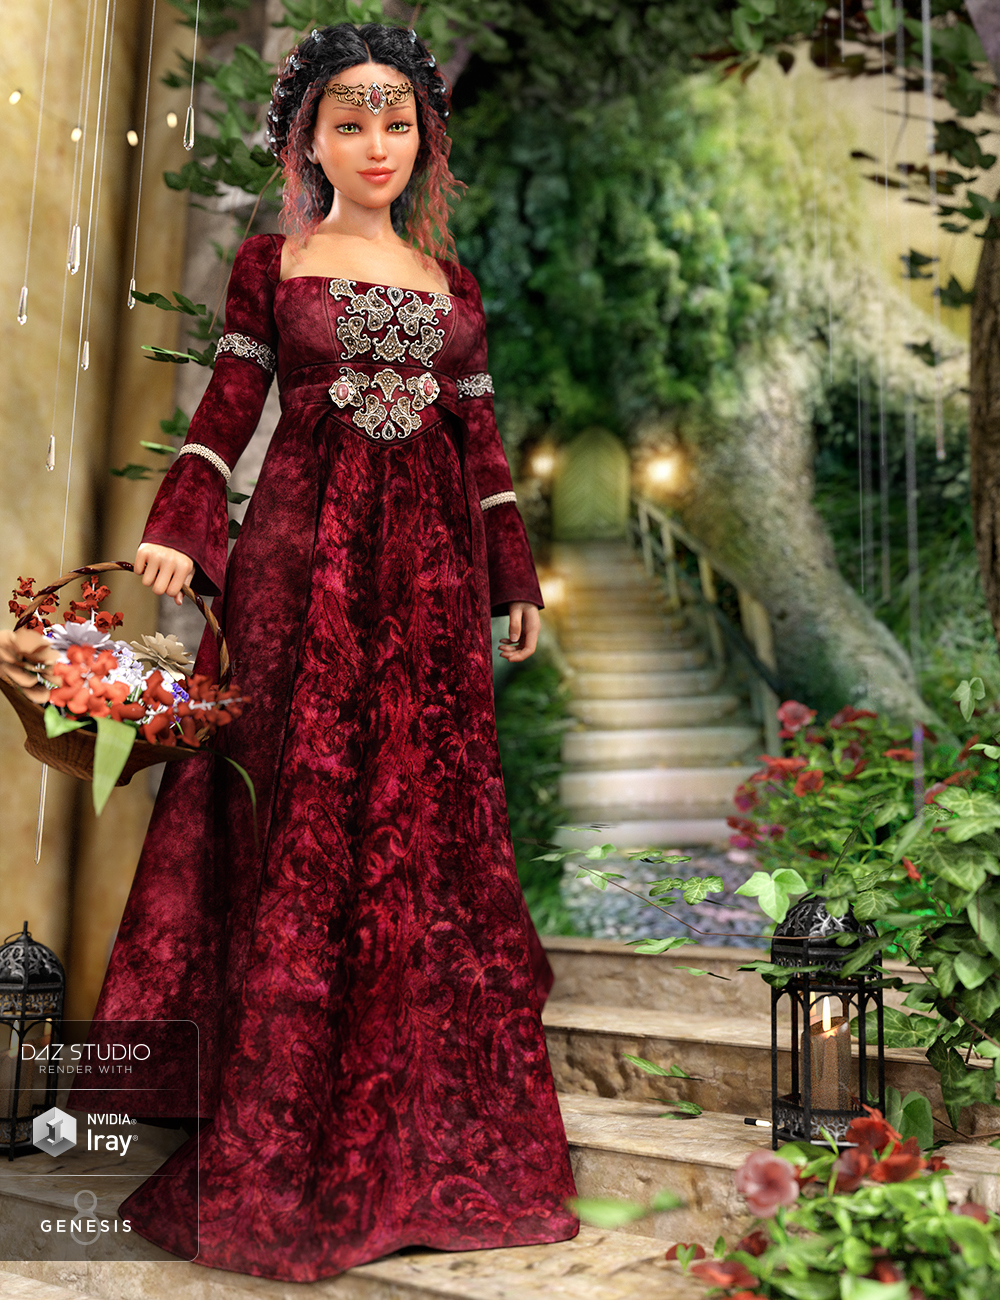 dForce Maiden Princess Outfit Textures by: Arien, 3D Models by Daz 3D